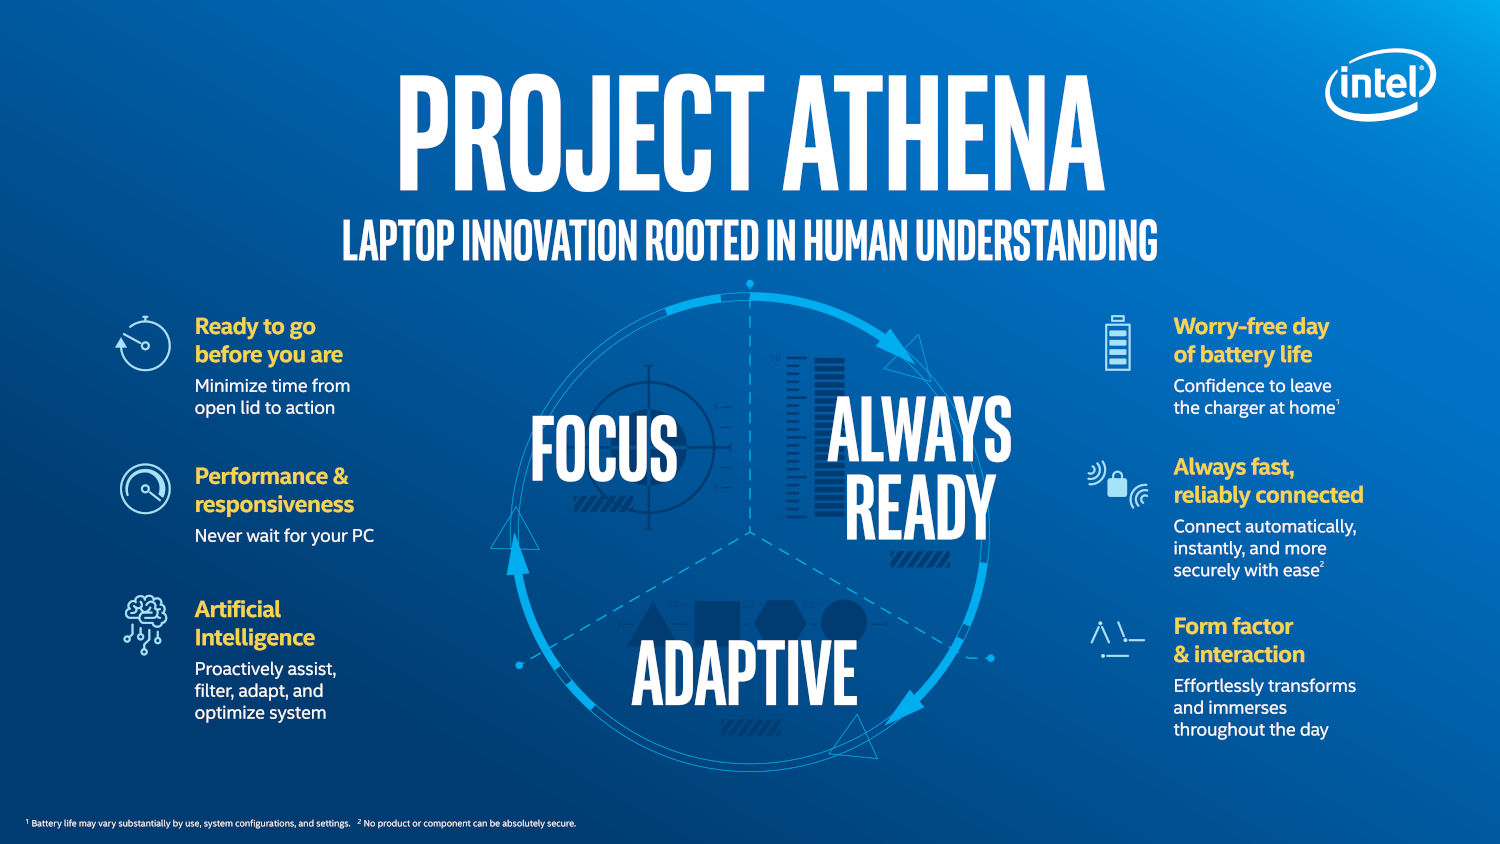 Intel / Projeto Athena